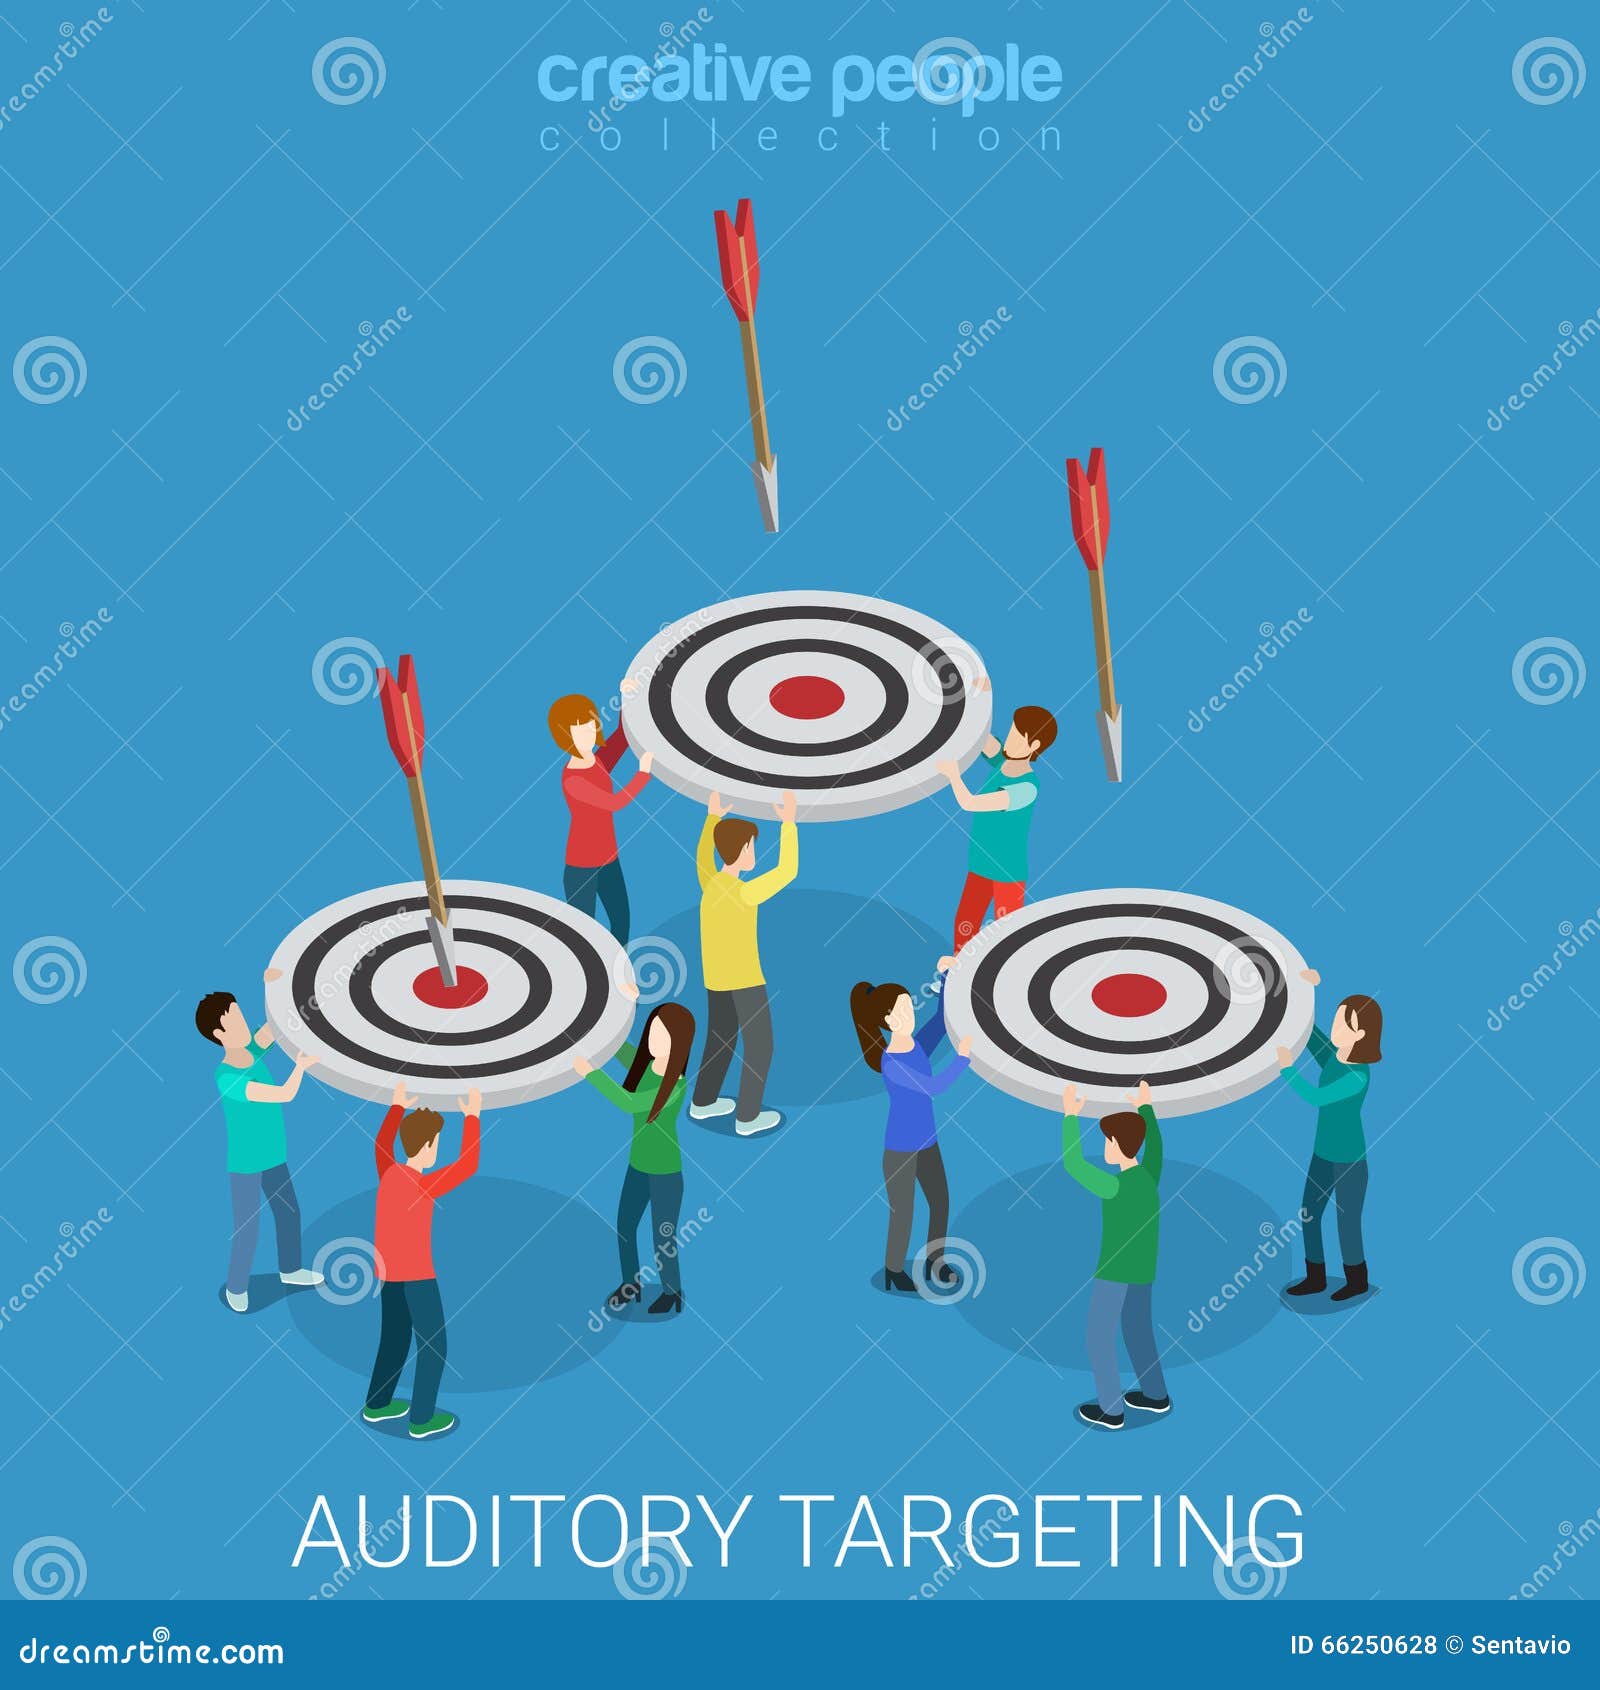 auditory targeting marketing business flat isometric  3d